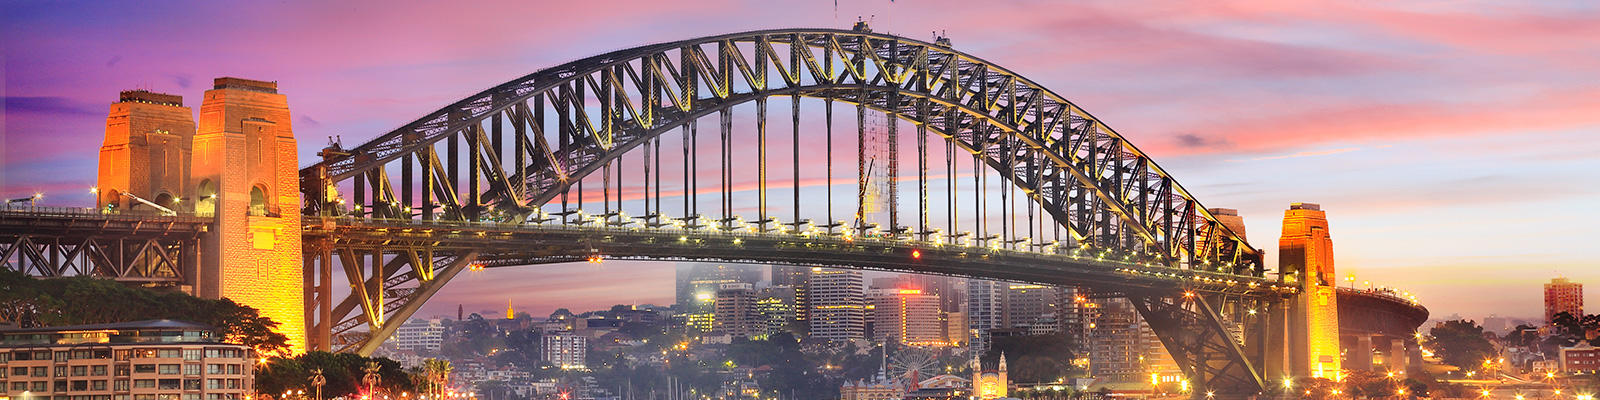 Sydney Harbour Bridge twinkles with lights at sunrise - Sydney spots to inspire creativity